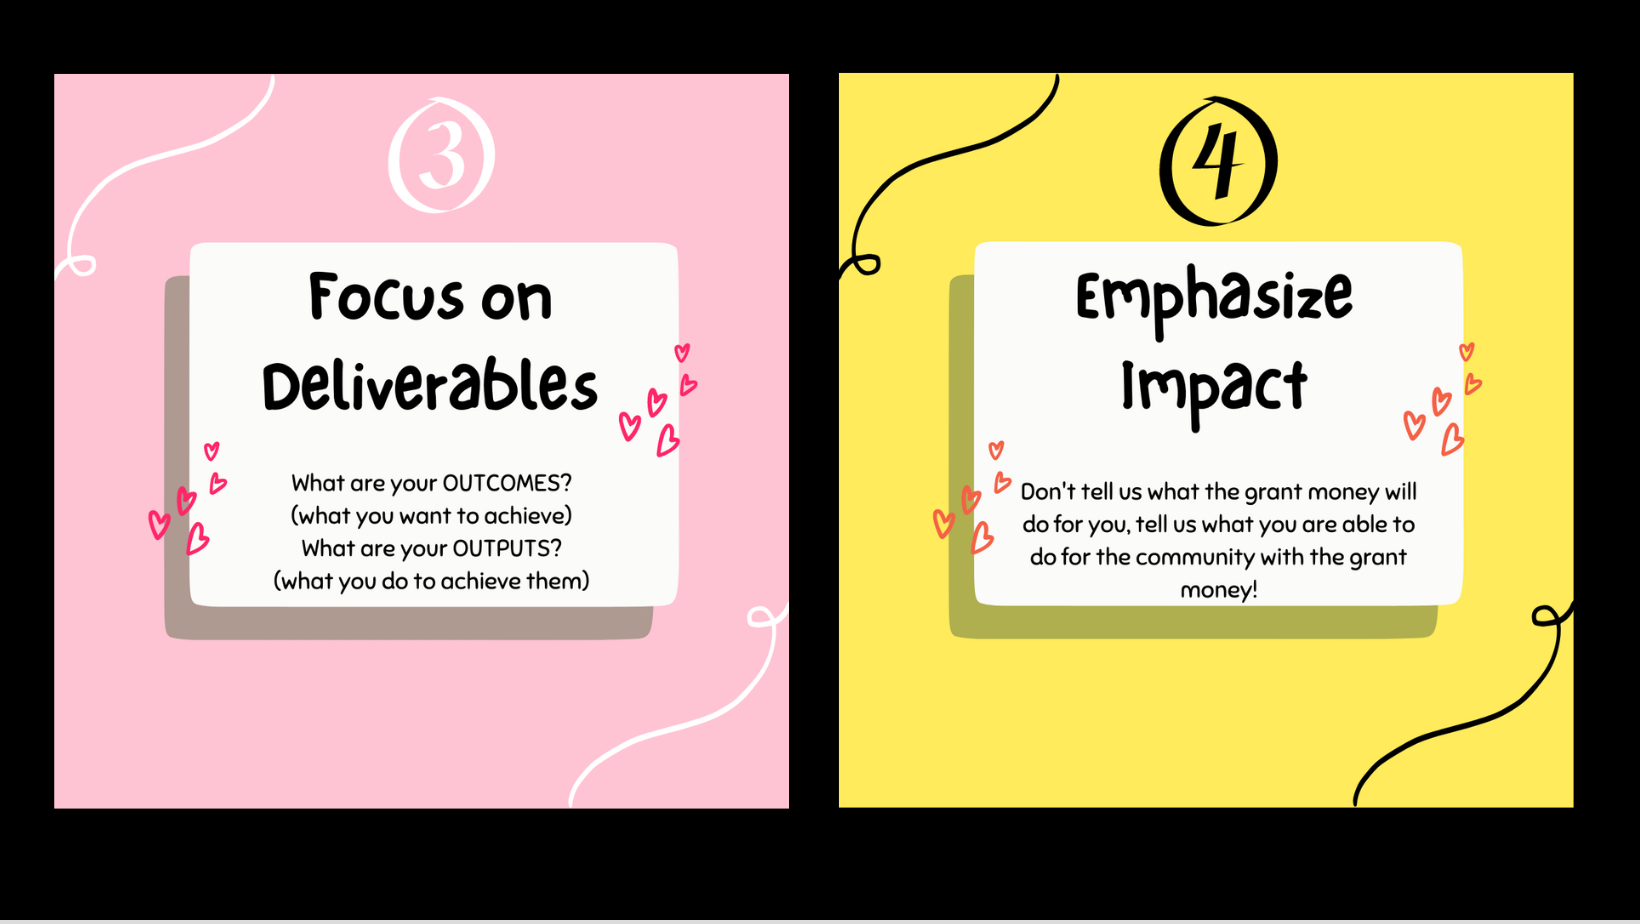 Top tip #3: Focus on Deliverables; Top Tip #4: Emphasize Impact